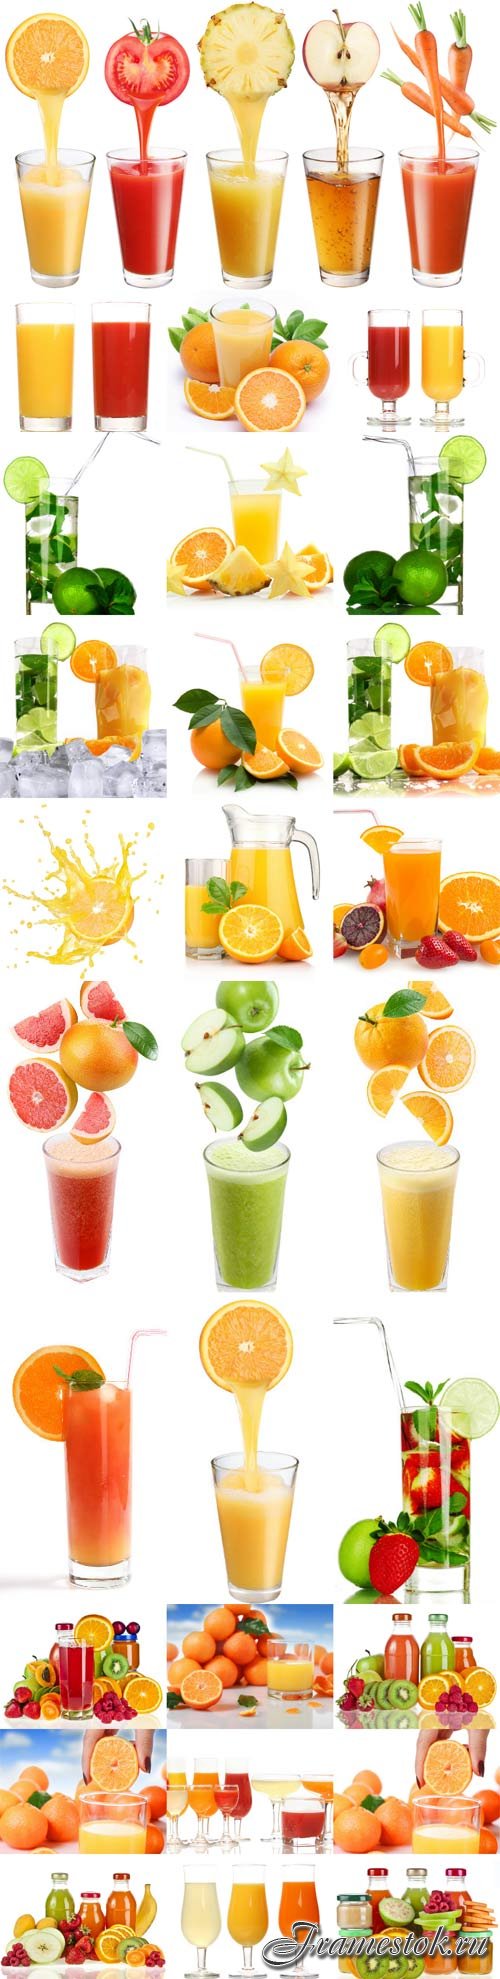 Freshly squeezed fruit juices stock photos